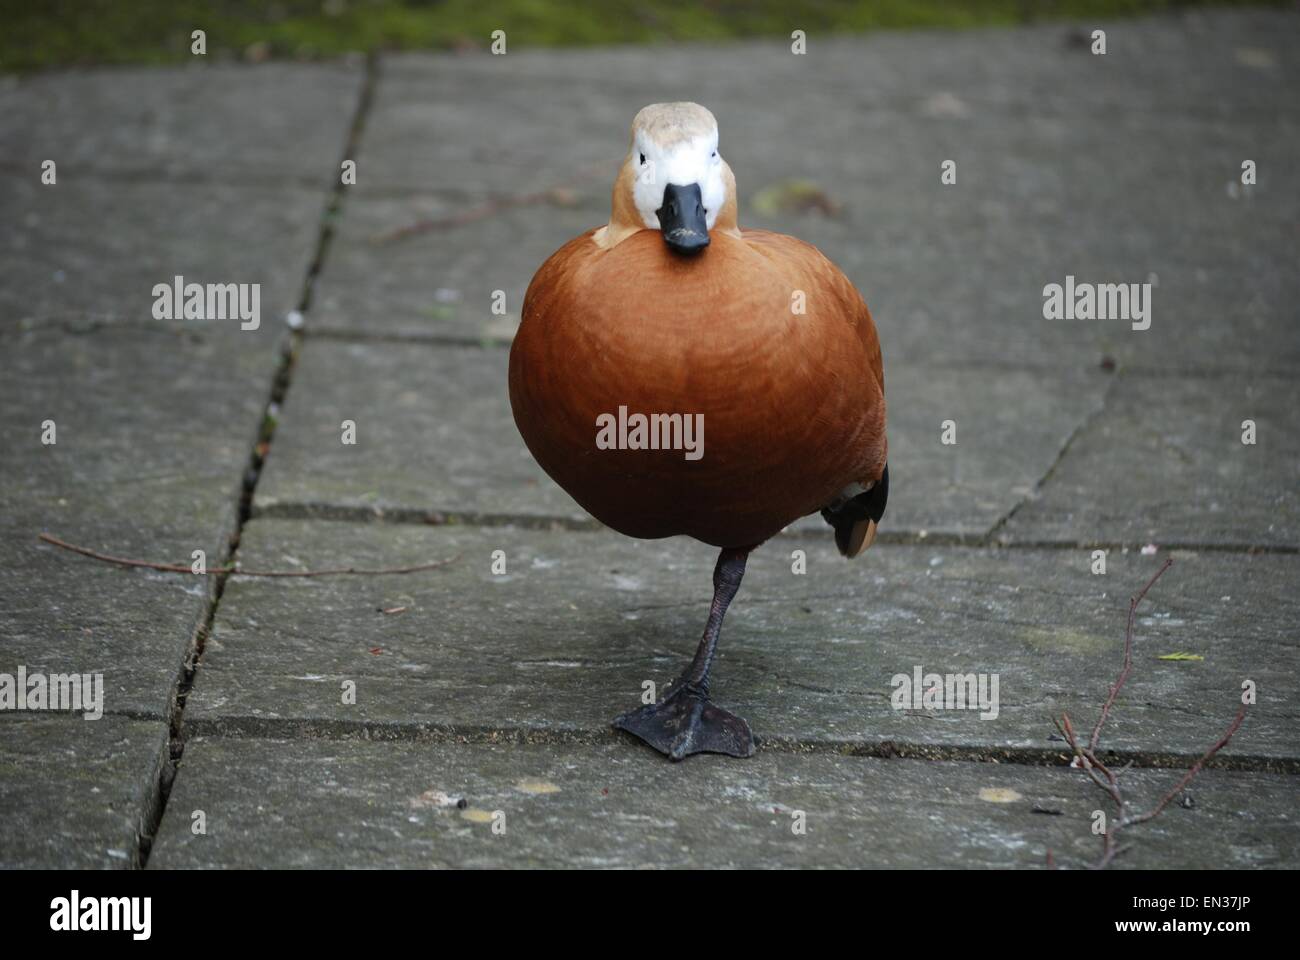 Ruddy Shelduck duck standing on one leg Stock Photo